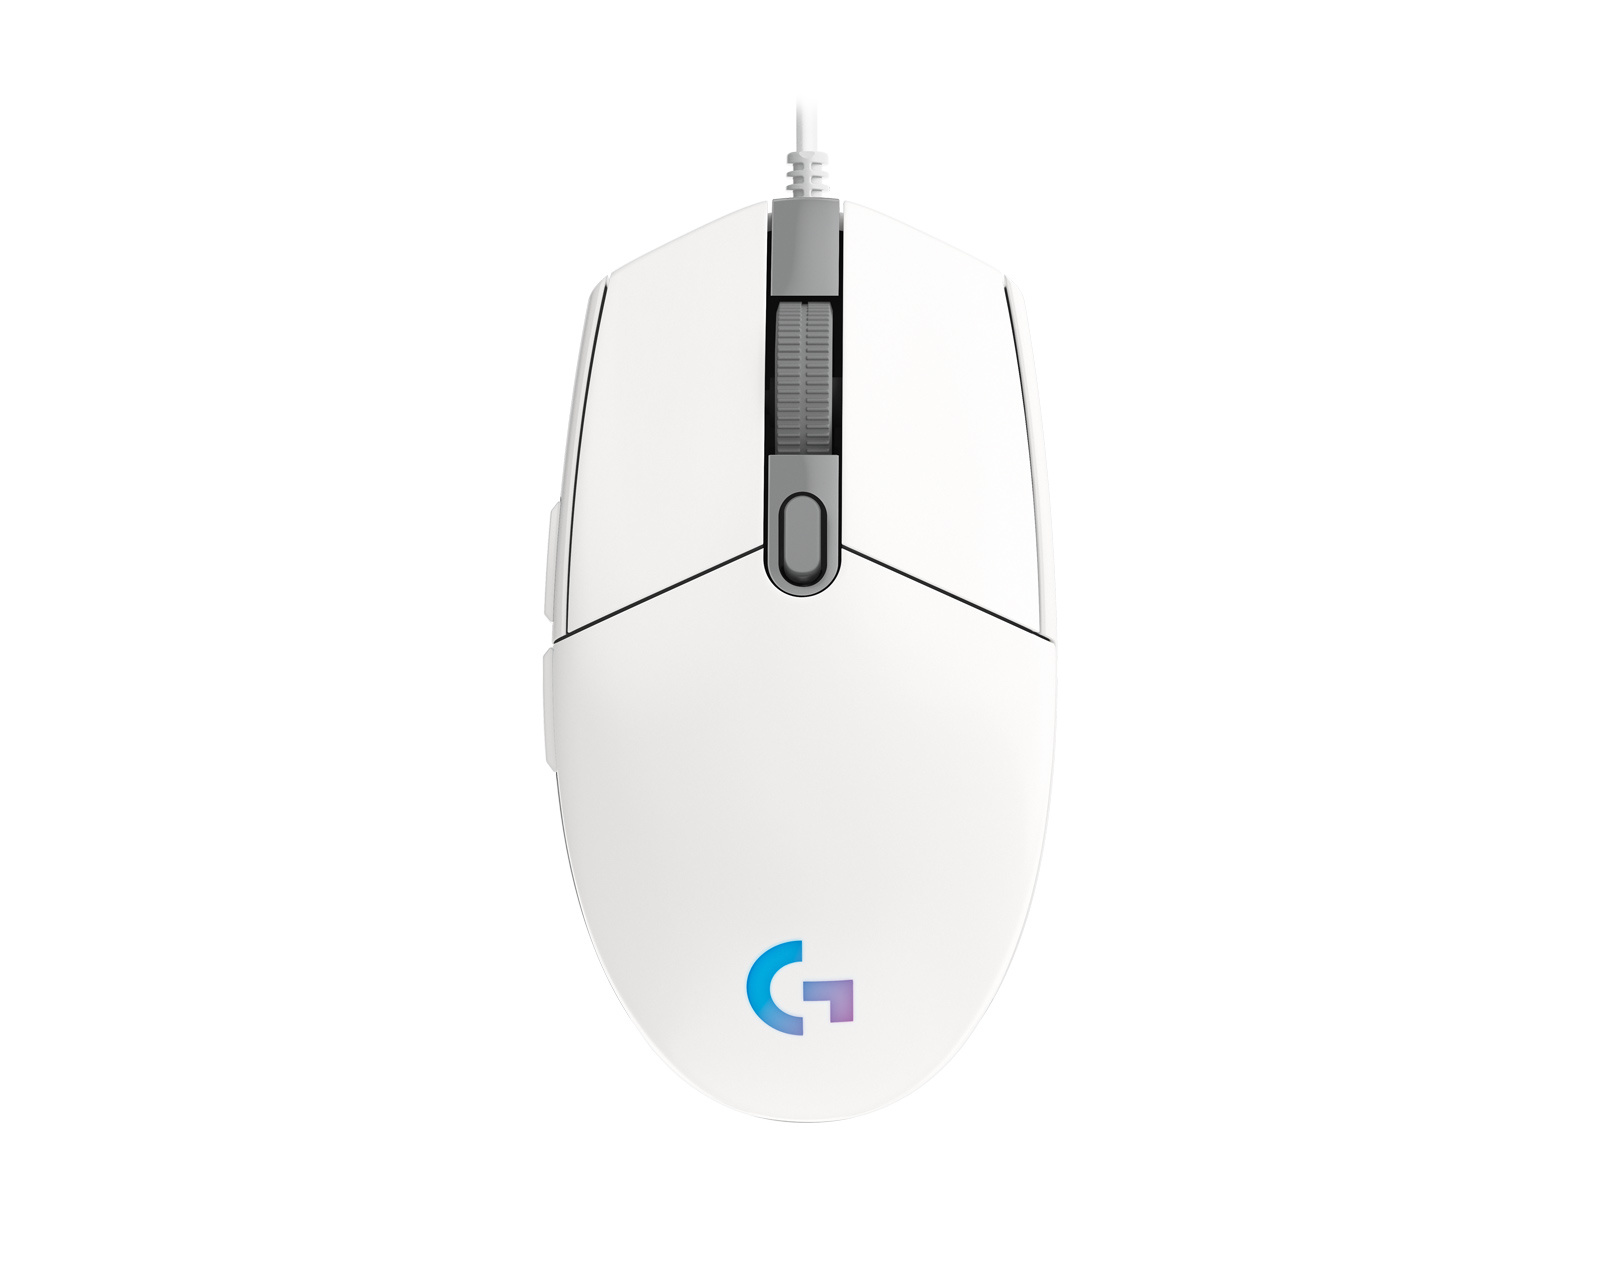 logitech g hub not detecting mouse